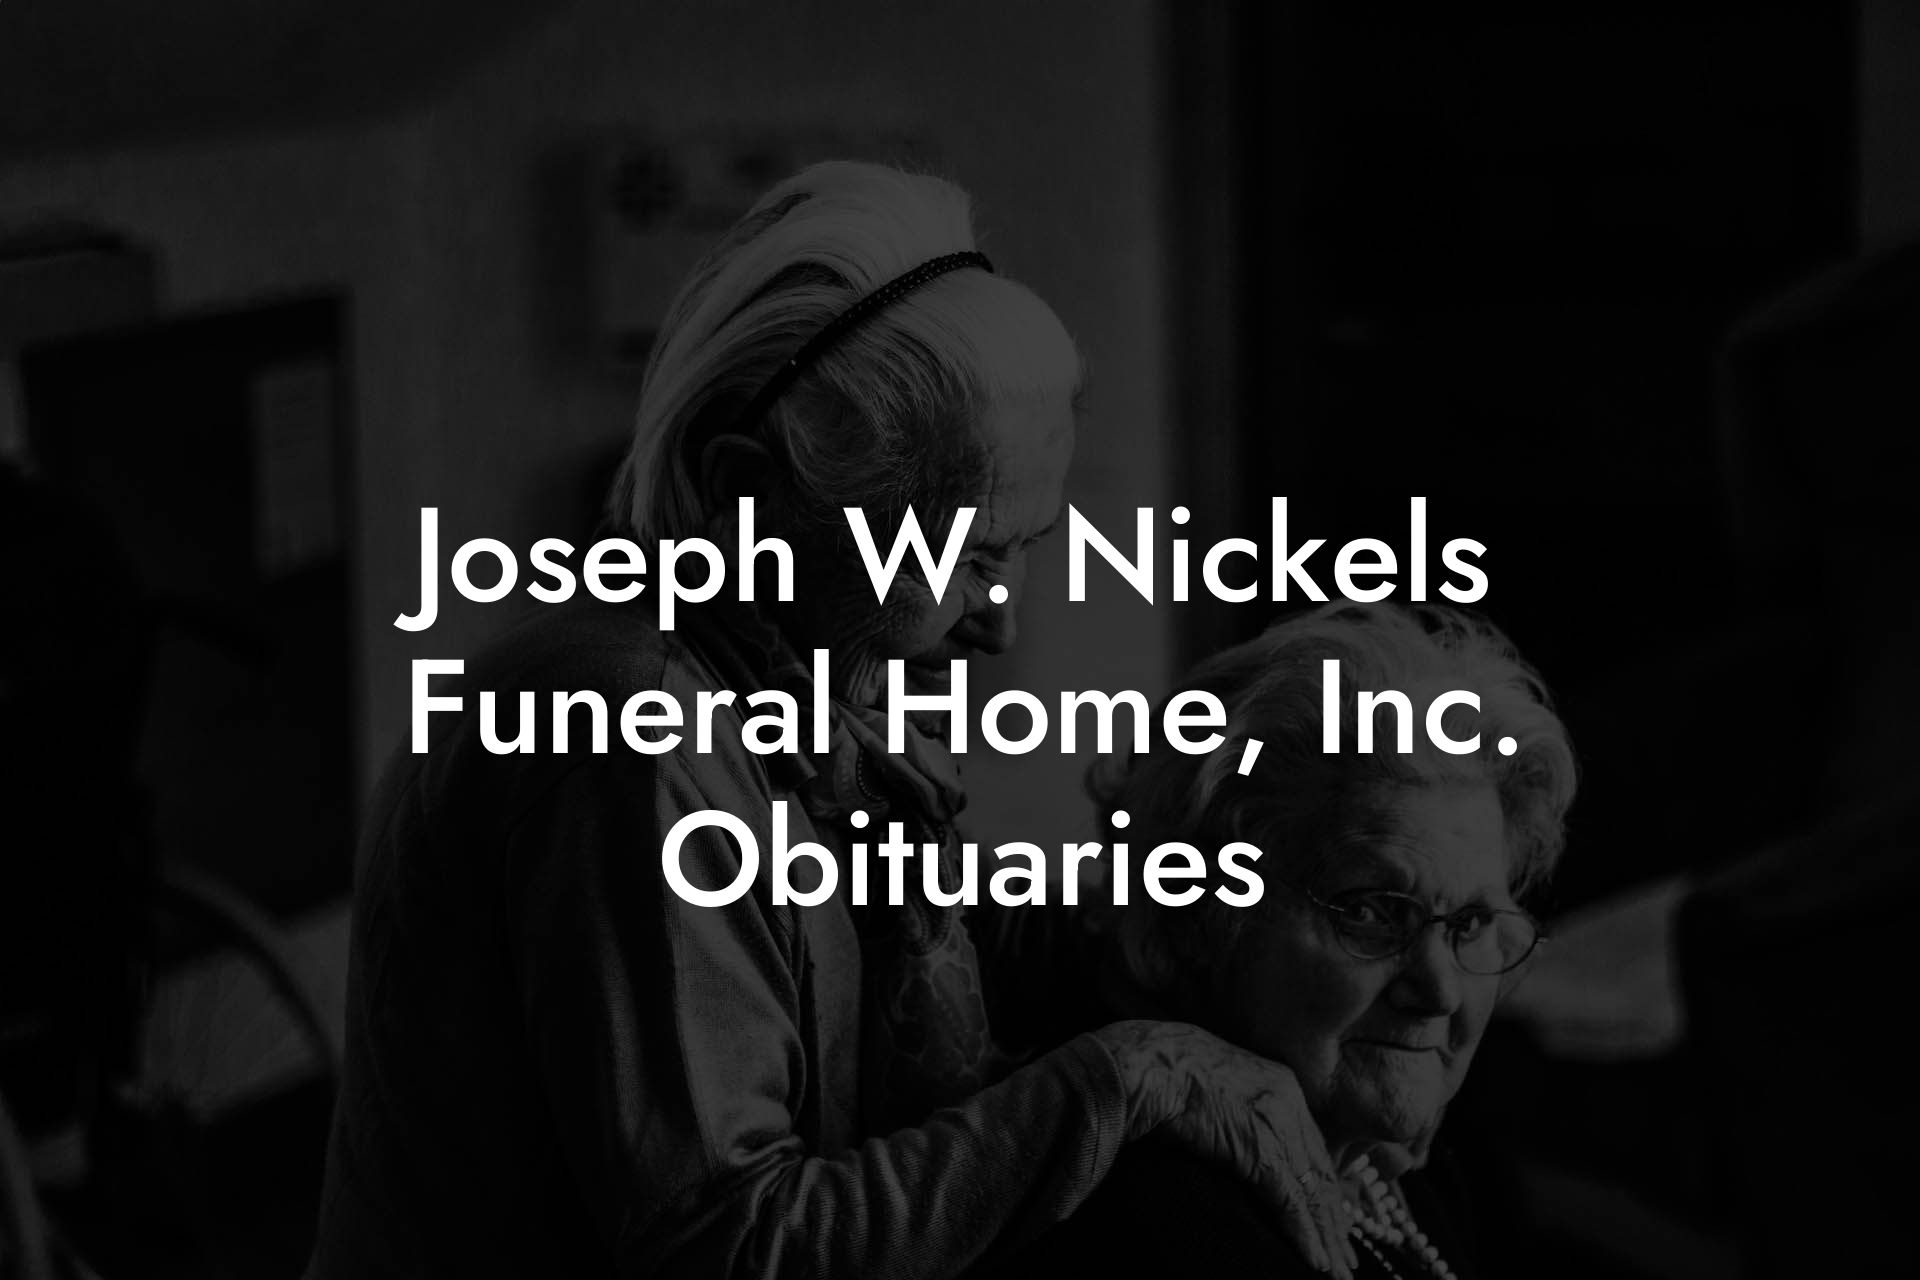 Joseph W. Nickels Funeral Home, Inc. Obituaries